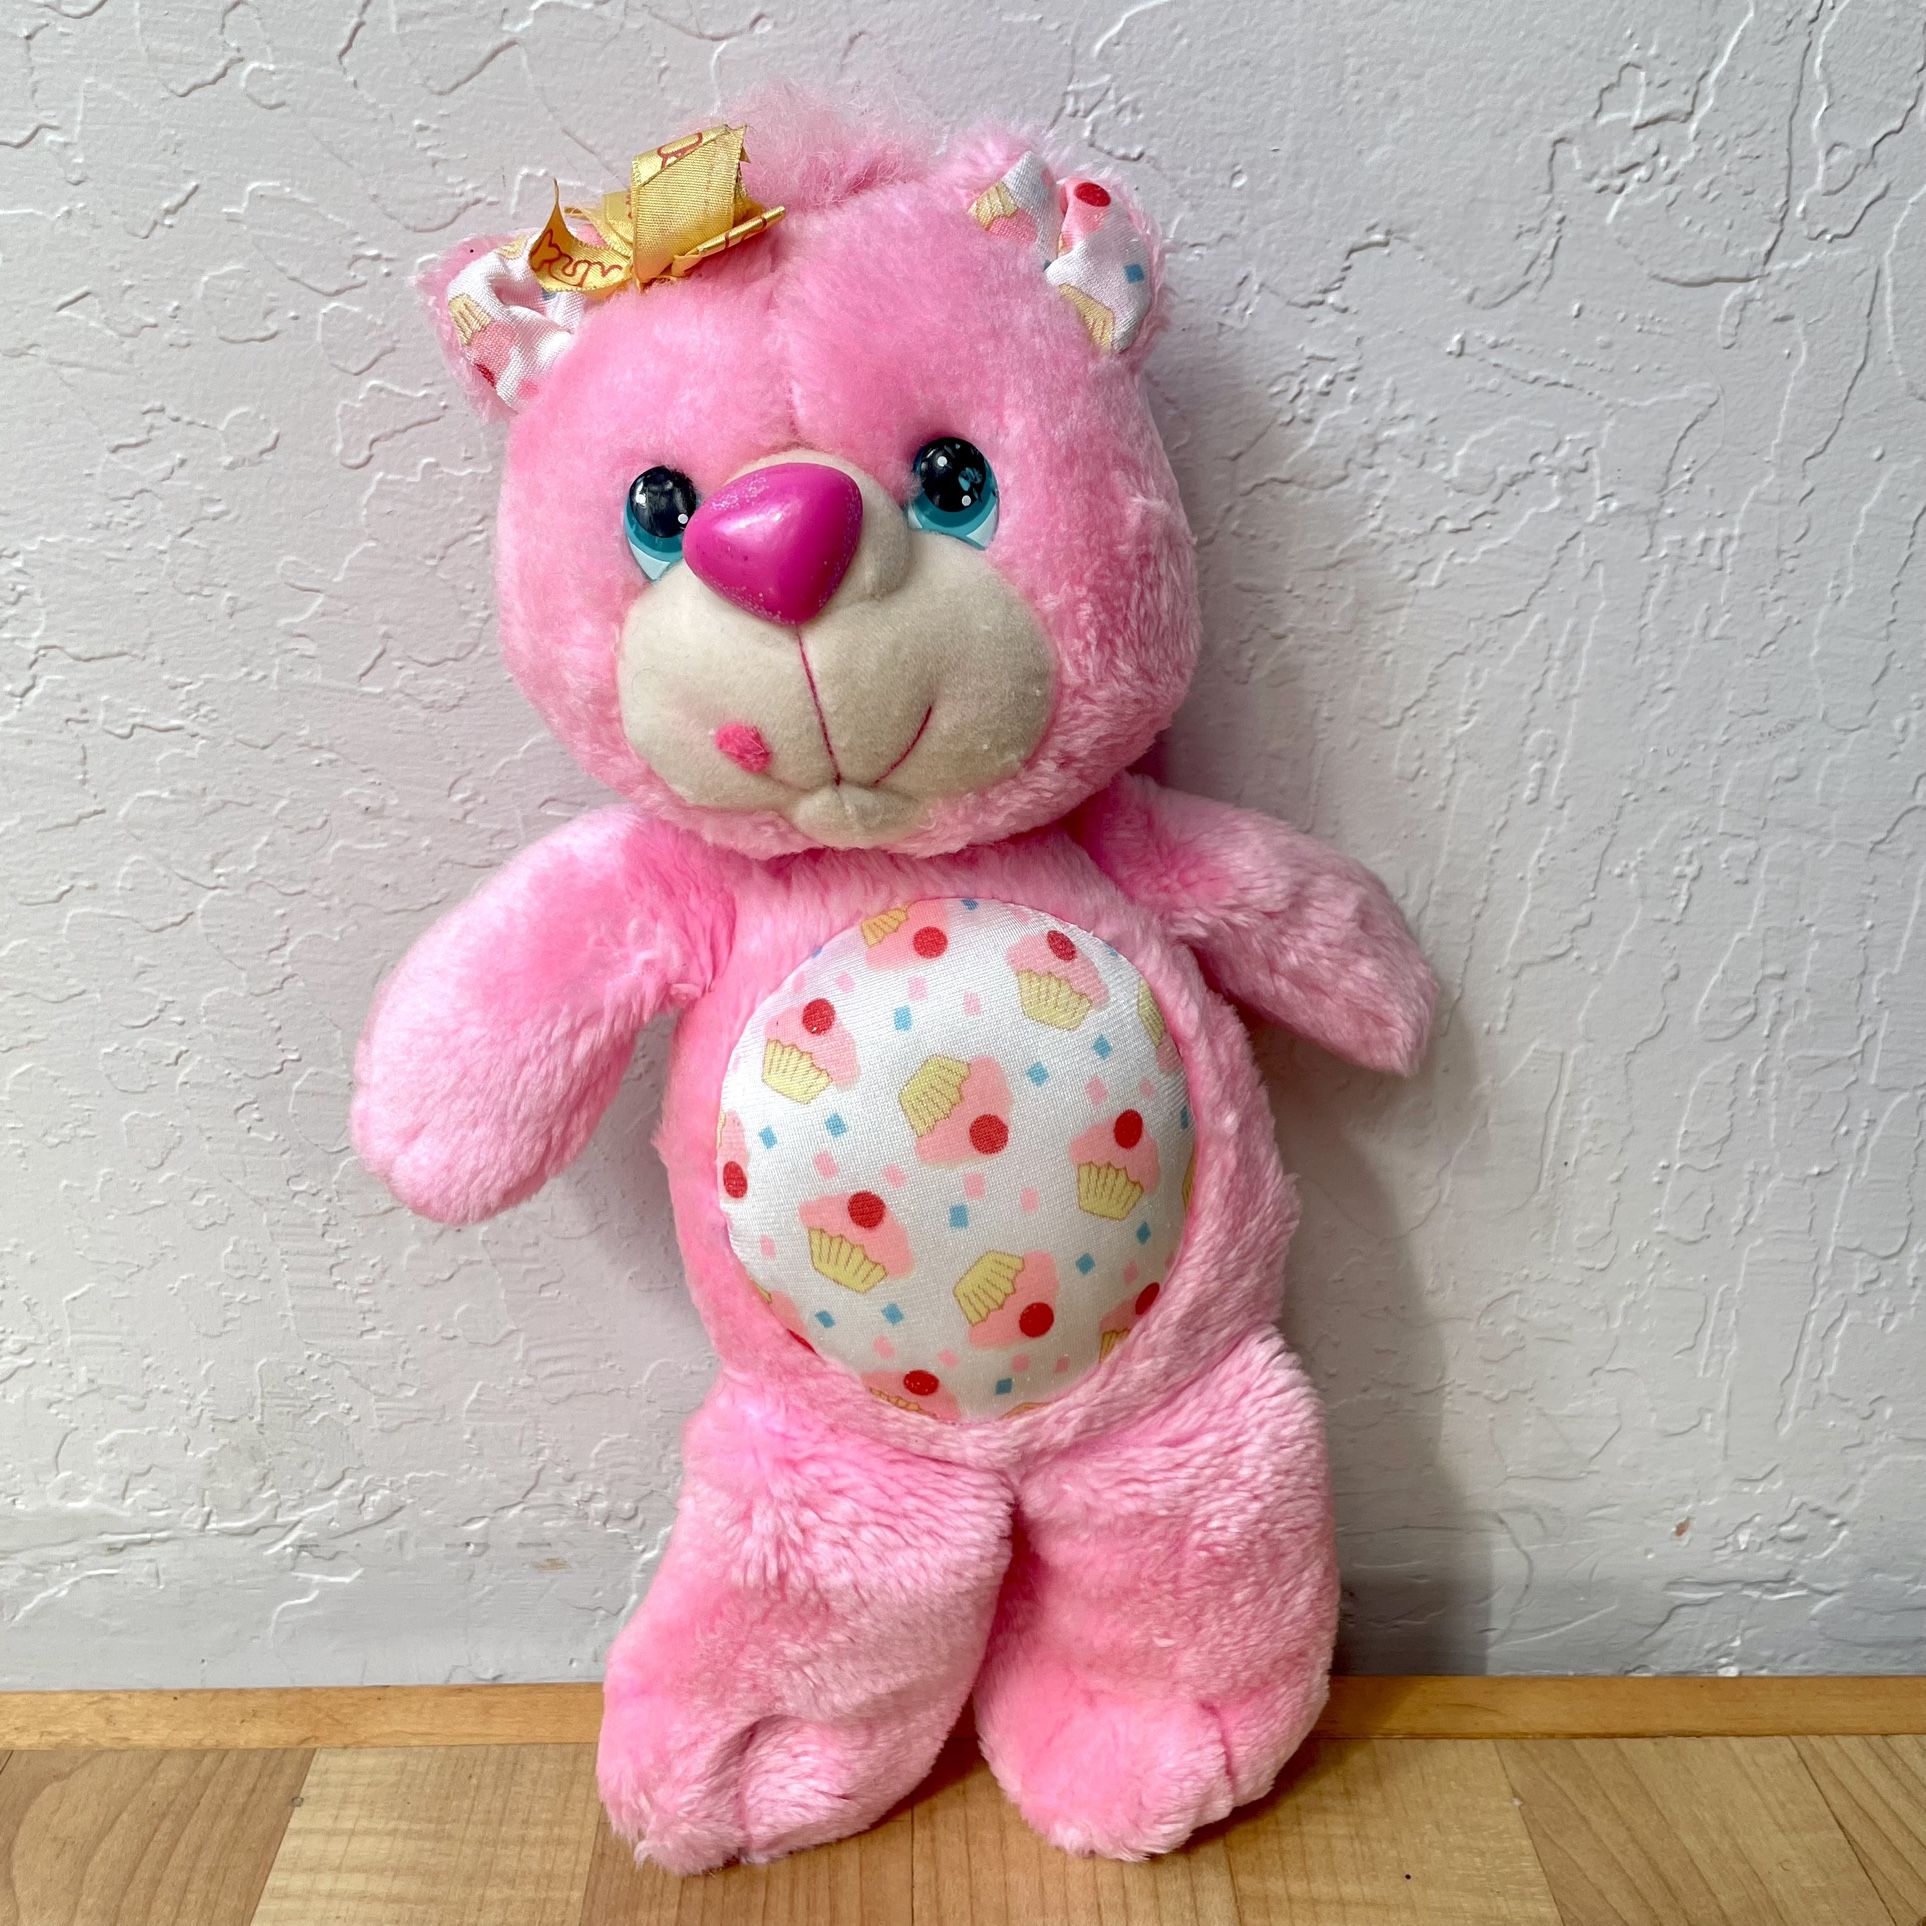 Vintage 1991 Party Yum Yum Teddy Cakes Pink Bear Plush Stuffed Animal Toy